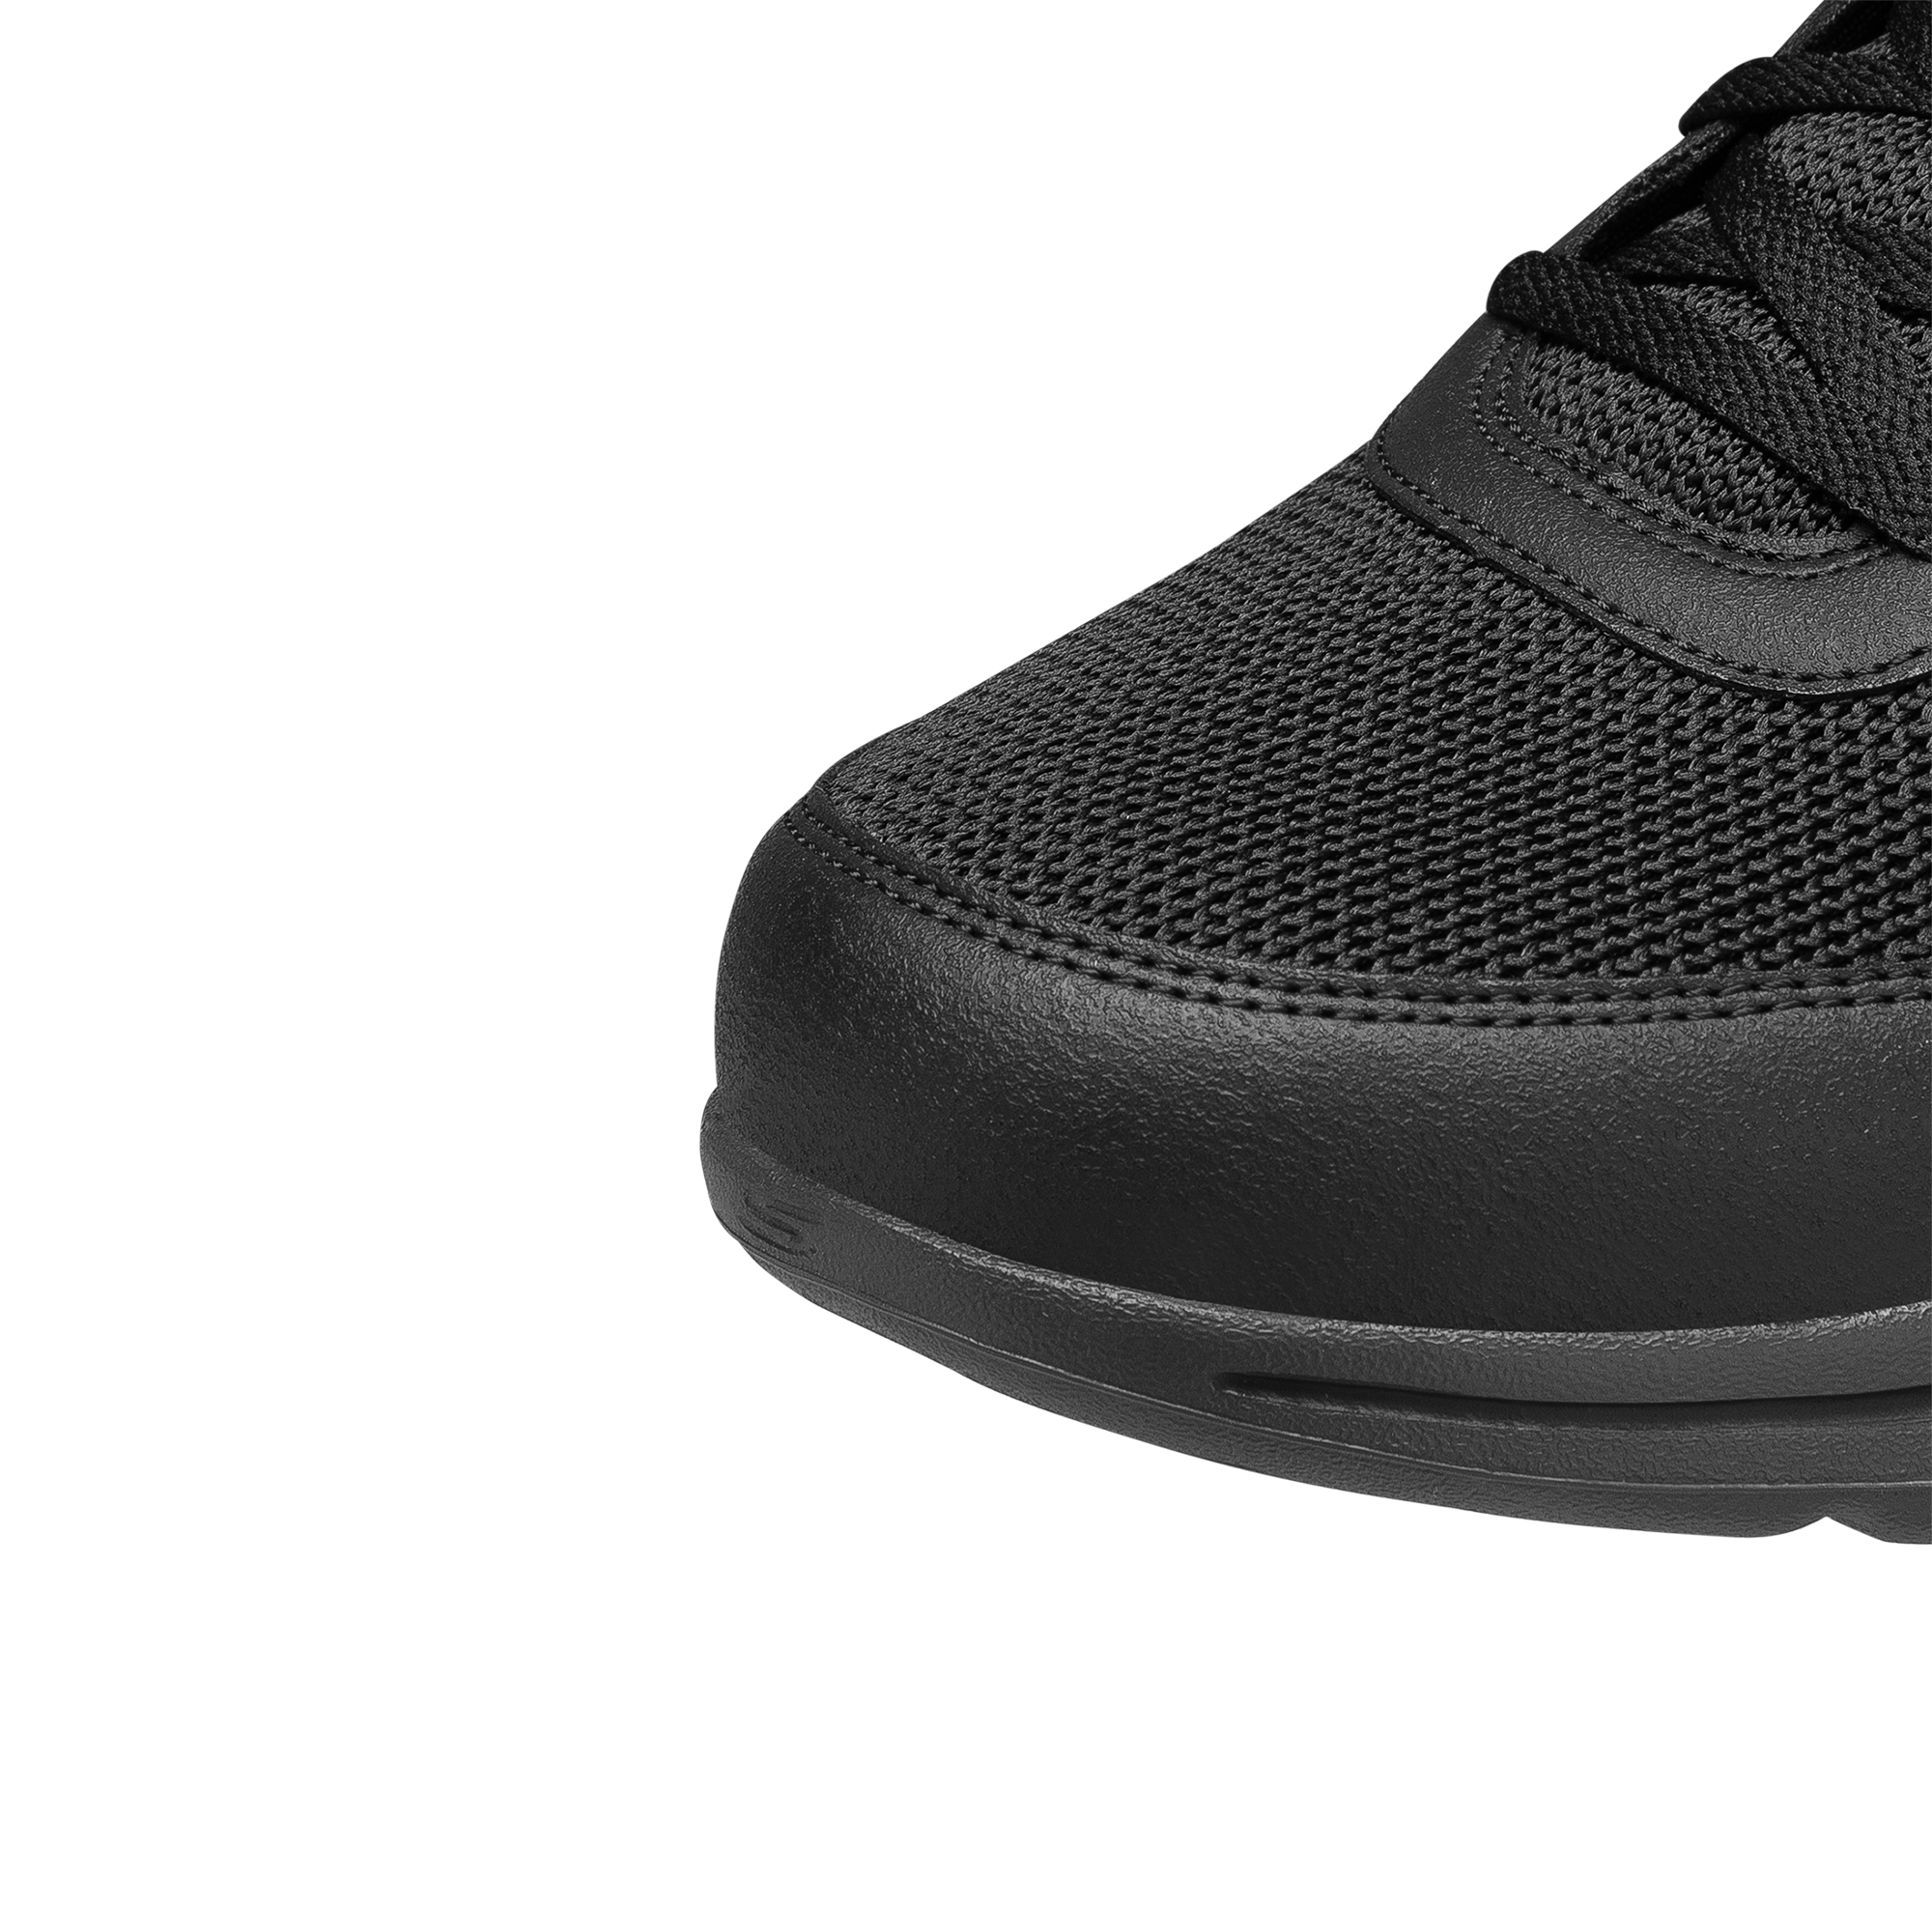 Skechers斯凯奇新款GOWALK健步鞋男子透气绑带休闲运动鞋216012-图1